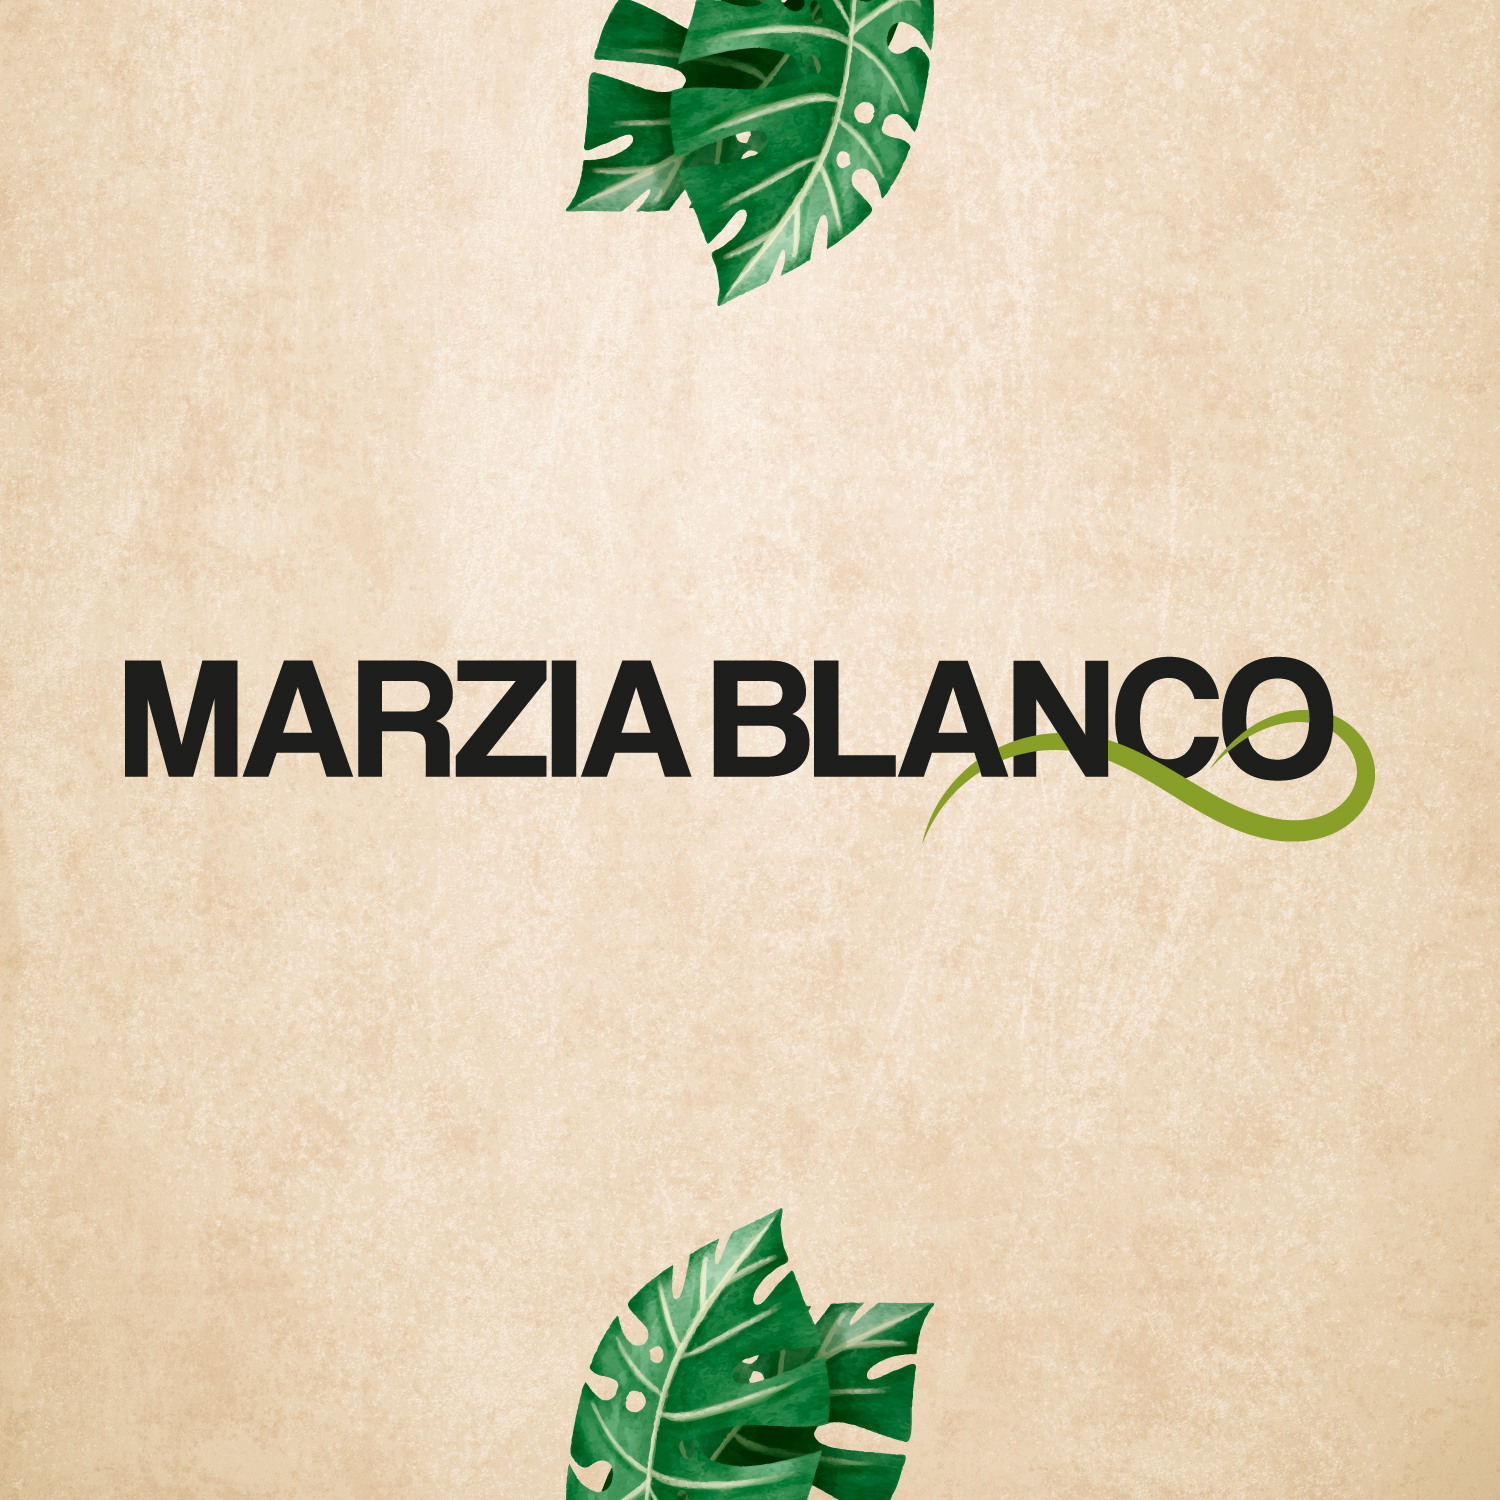 marzia-blanco-logo-pressh24